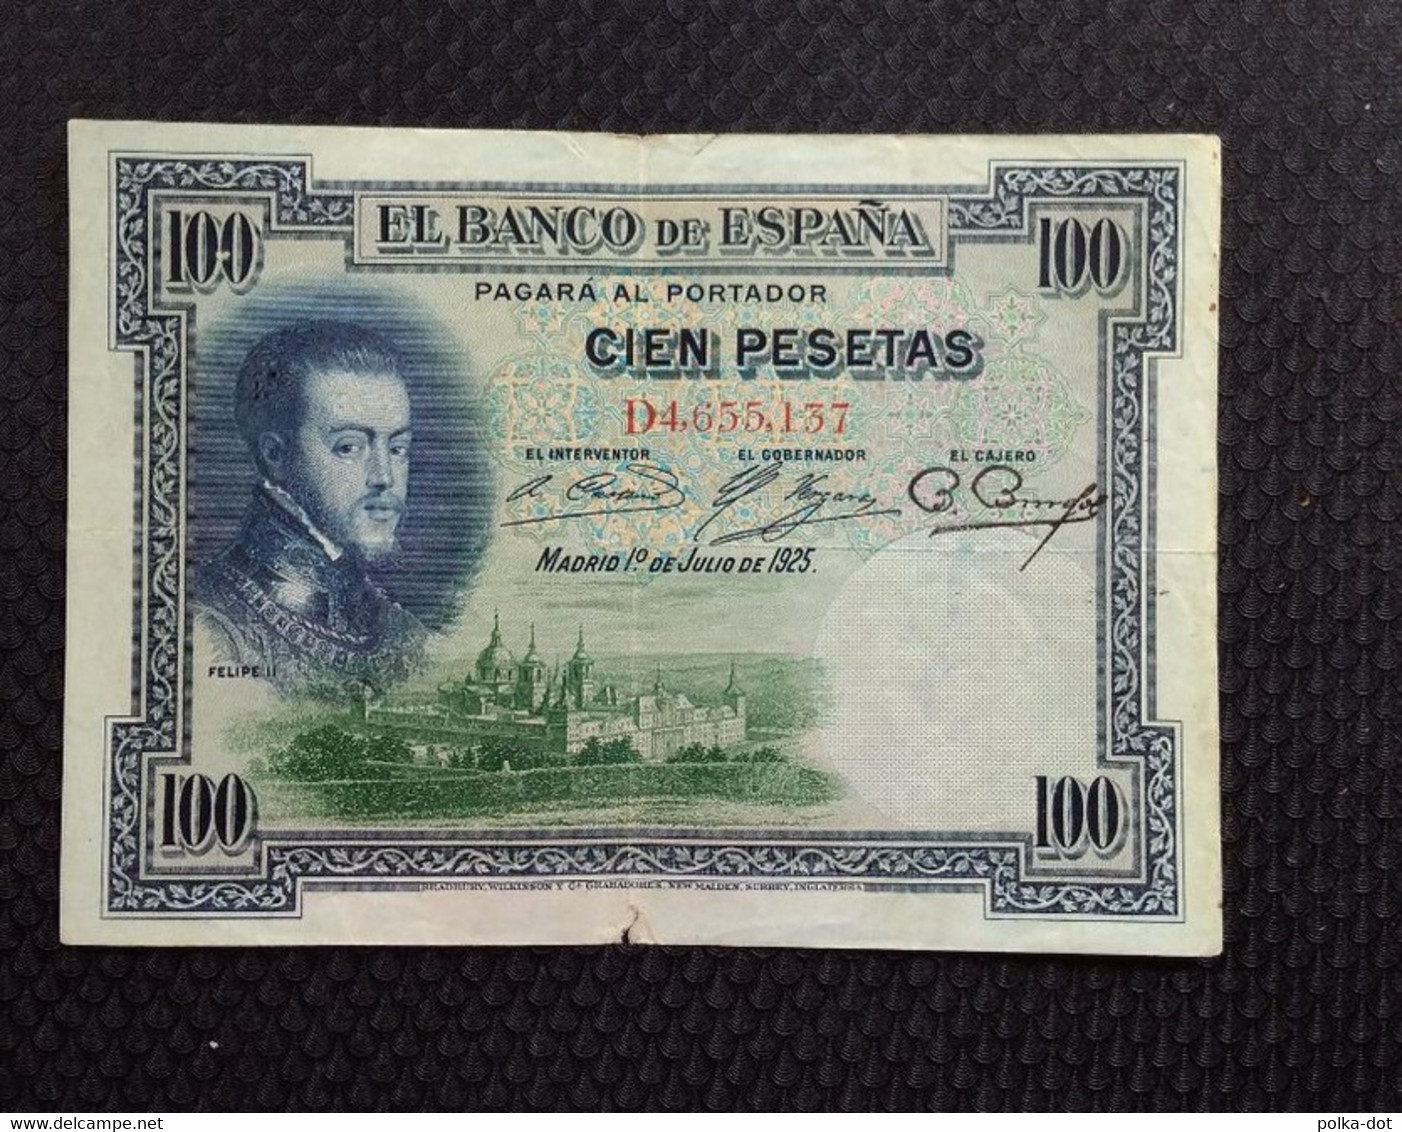 SPAIN 1925 BANK NOTE PAPER CURRENCY 100 PESETAS USED CONDITION AS SEEN - 100 Pesetas